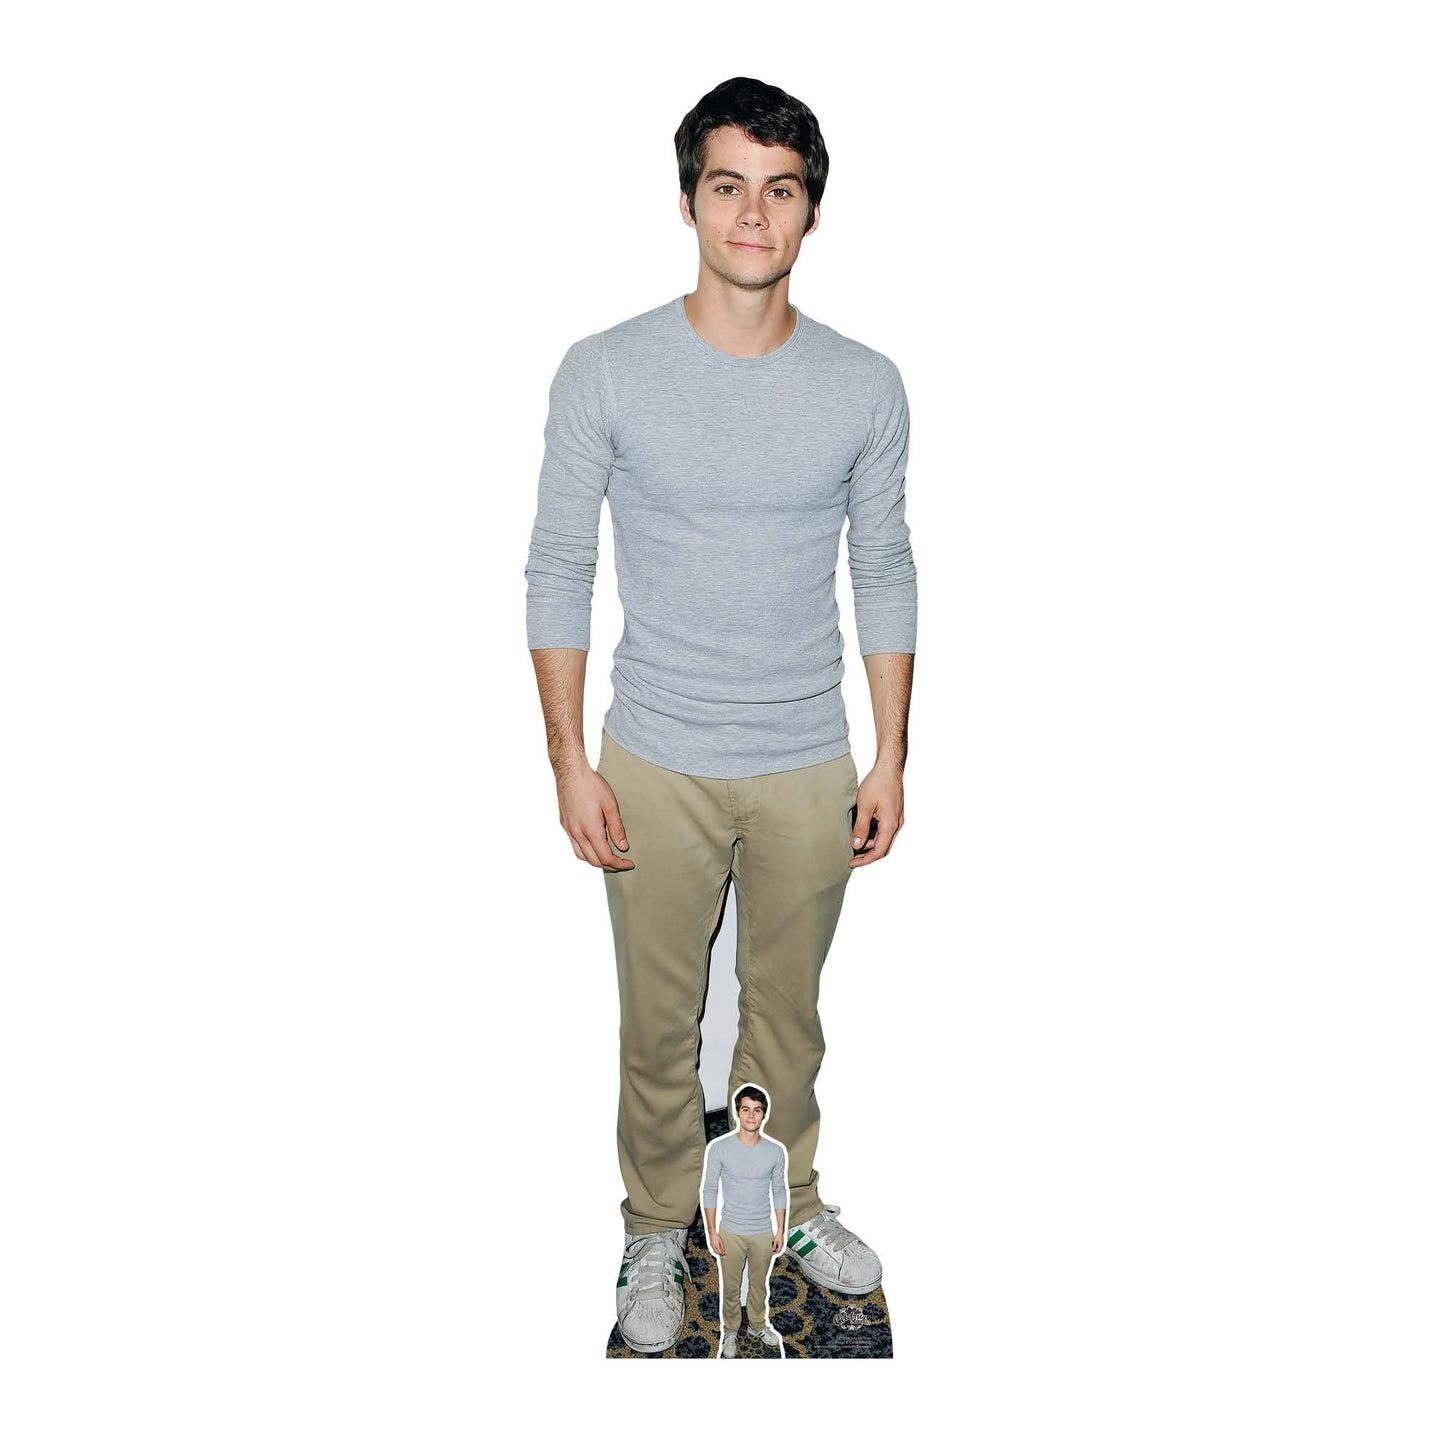 CS884 Dylan O'Brien (Grey Shirt) Height 179cm Lifesize Cardboard Cut Out With Mini